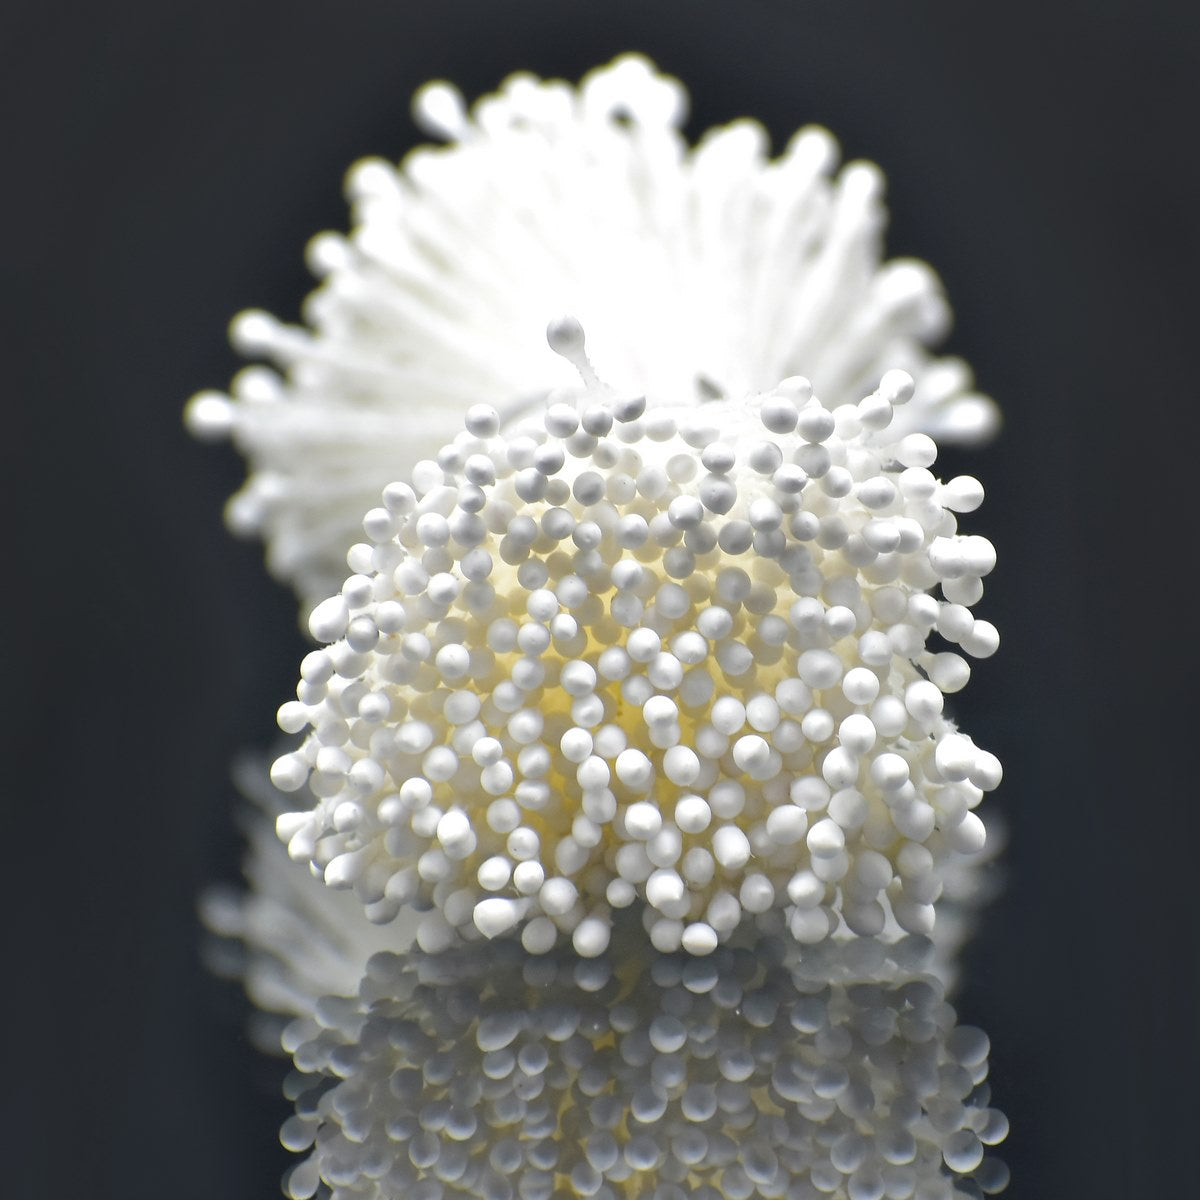 jags-mumbai Artificial Flower Artificial Flower Polons Pack Of 5 White